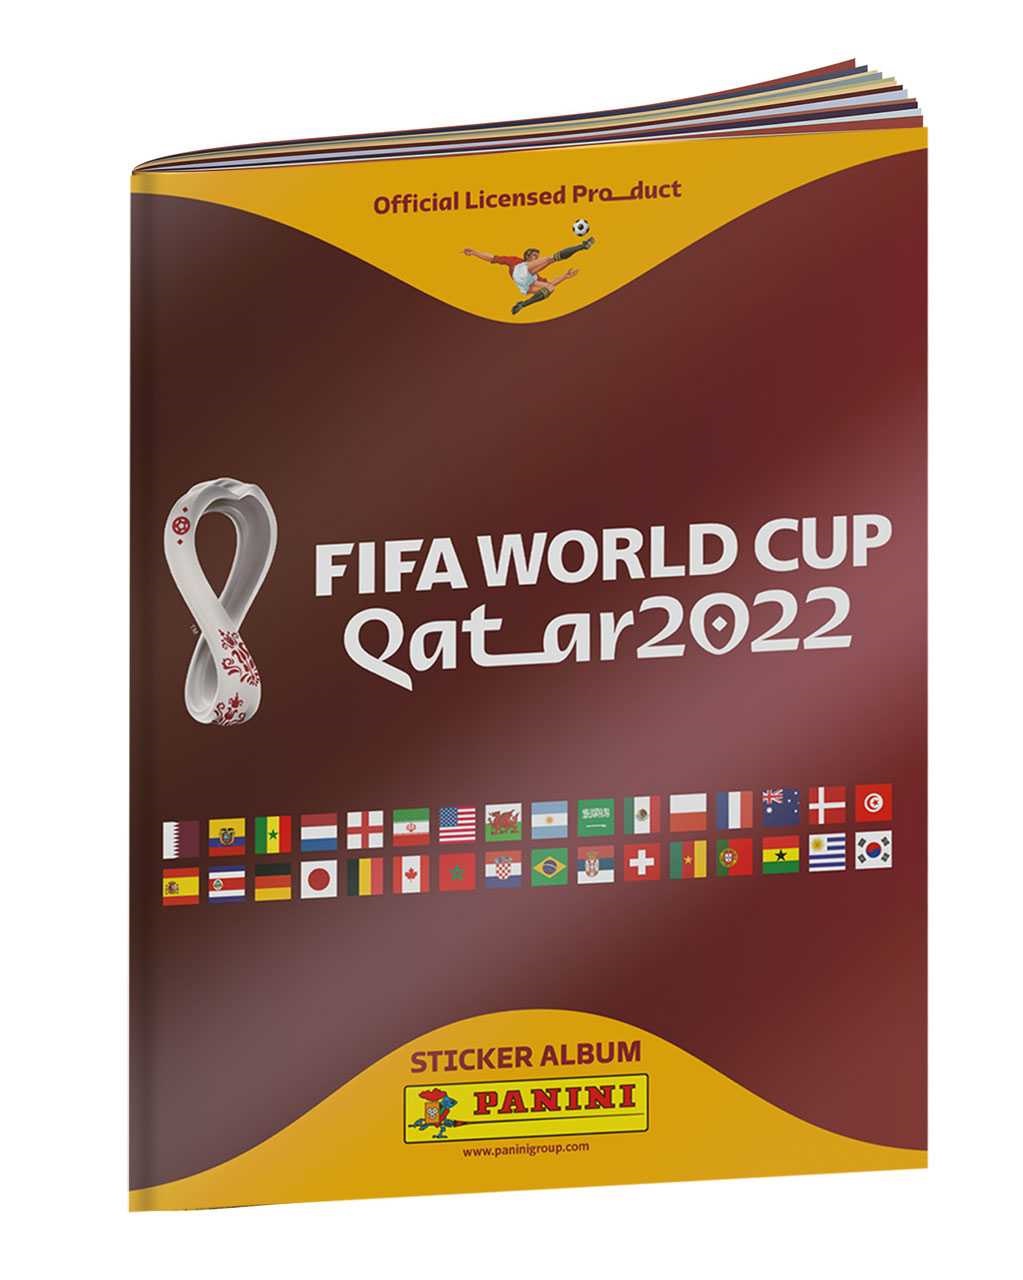 Panini WORLD CUP 2022 album